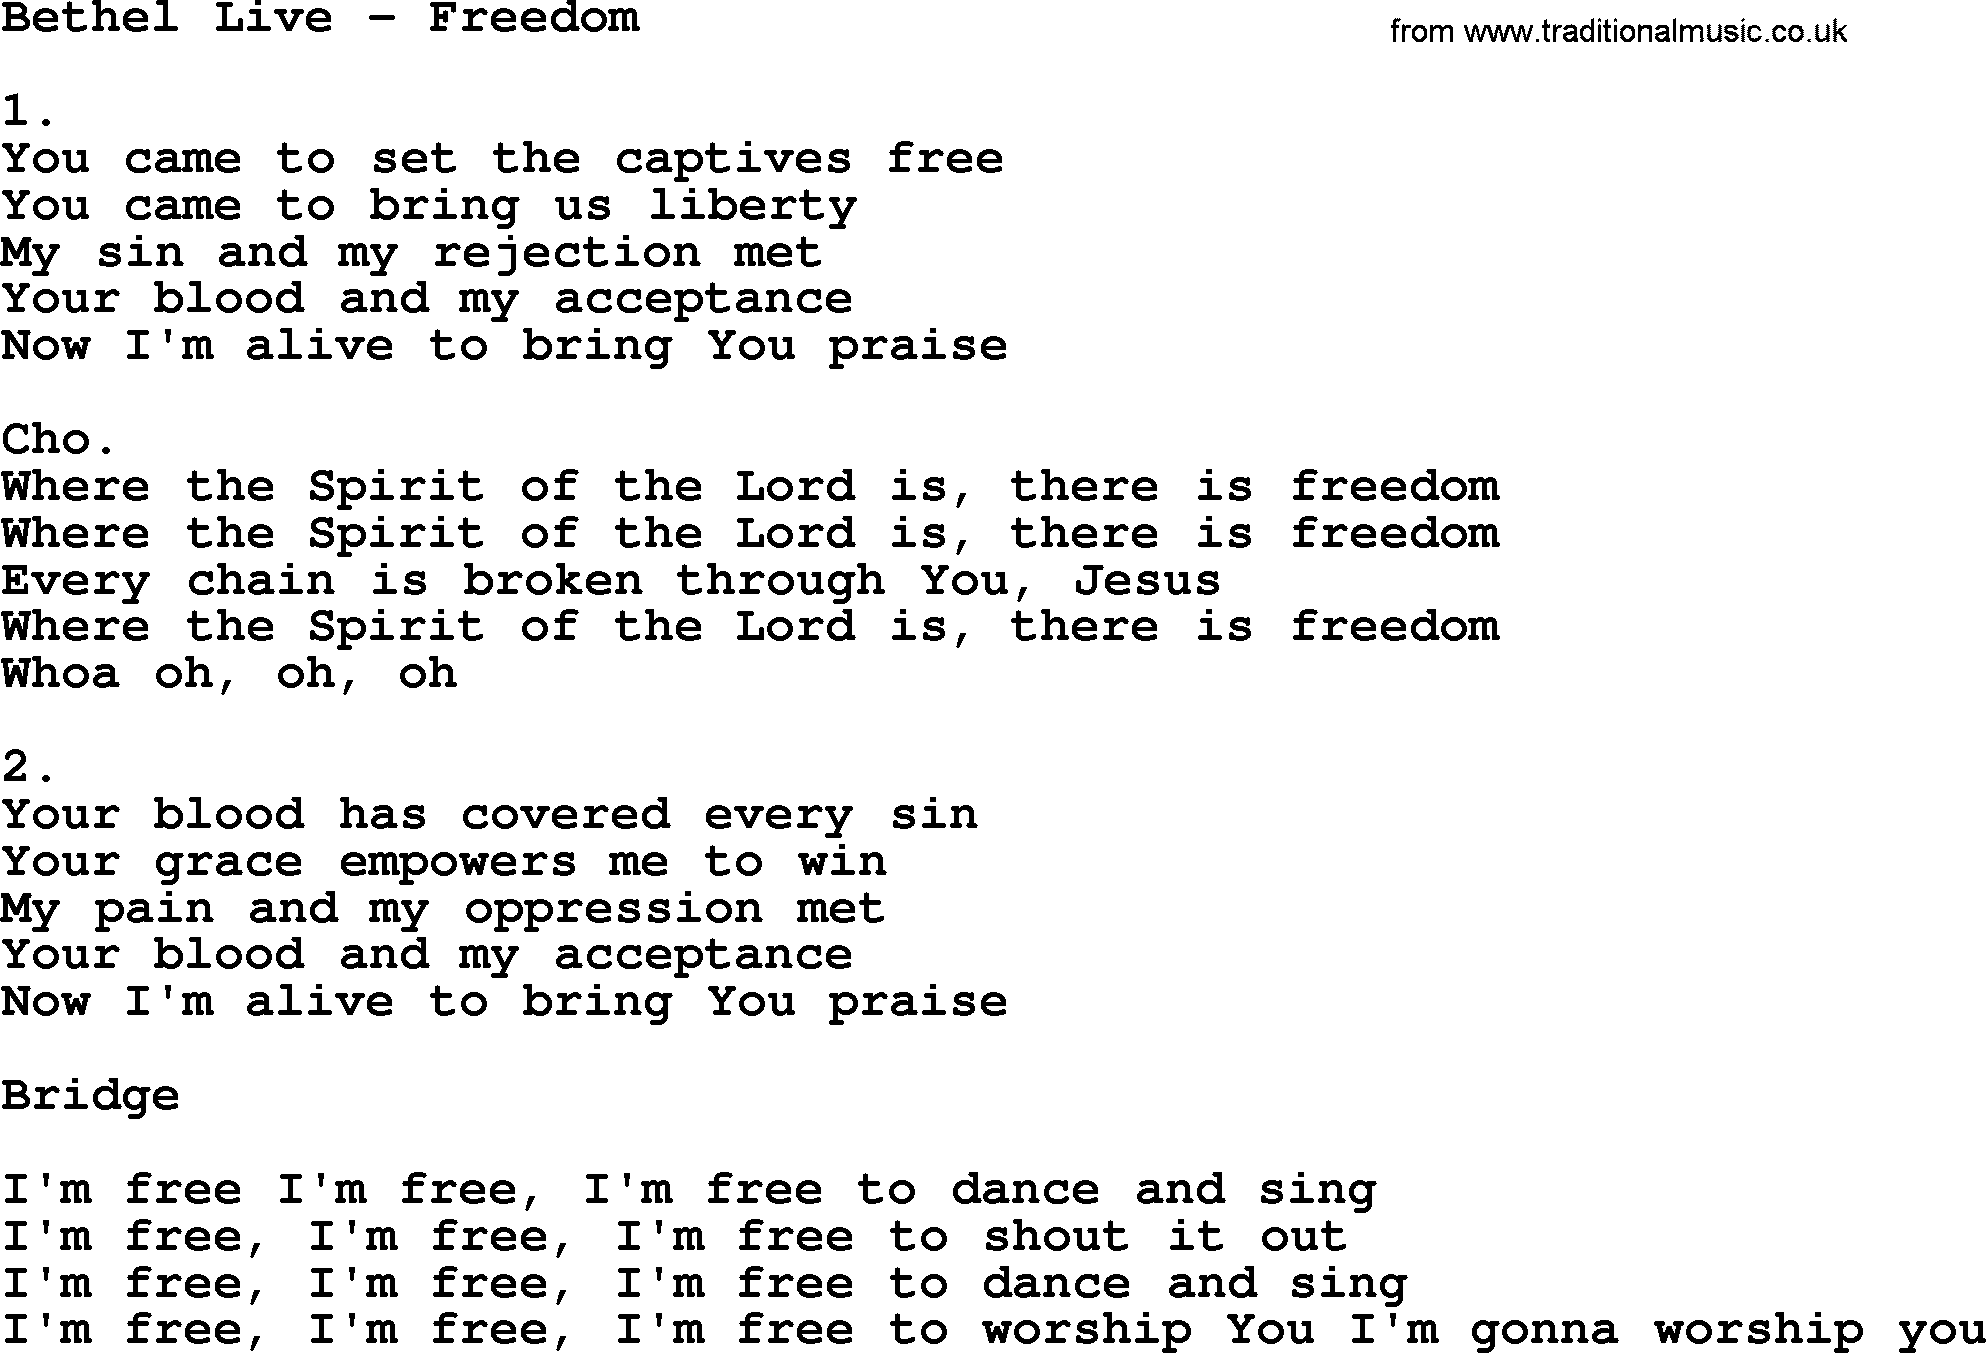 Apostolic & Pentecostal Hymns and Songs, Hymn: Bethel Live - Freedom lyrics and PDF